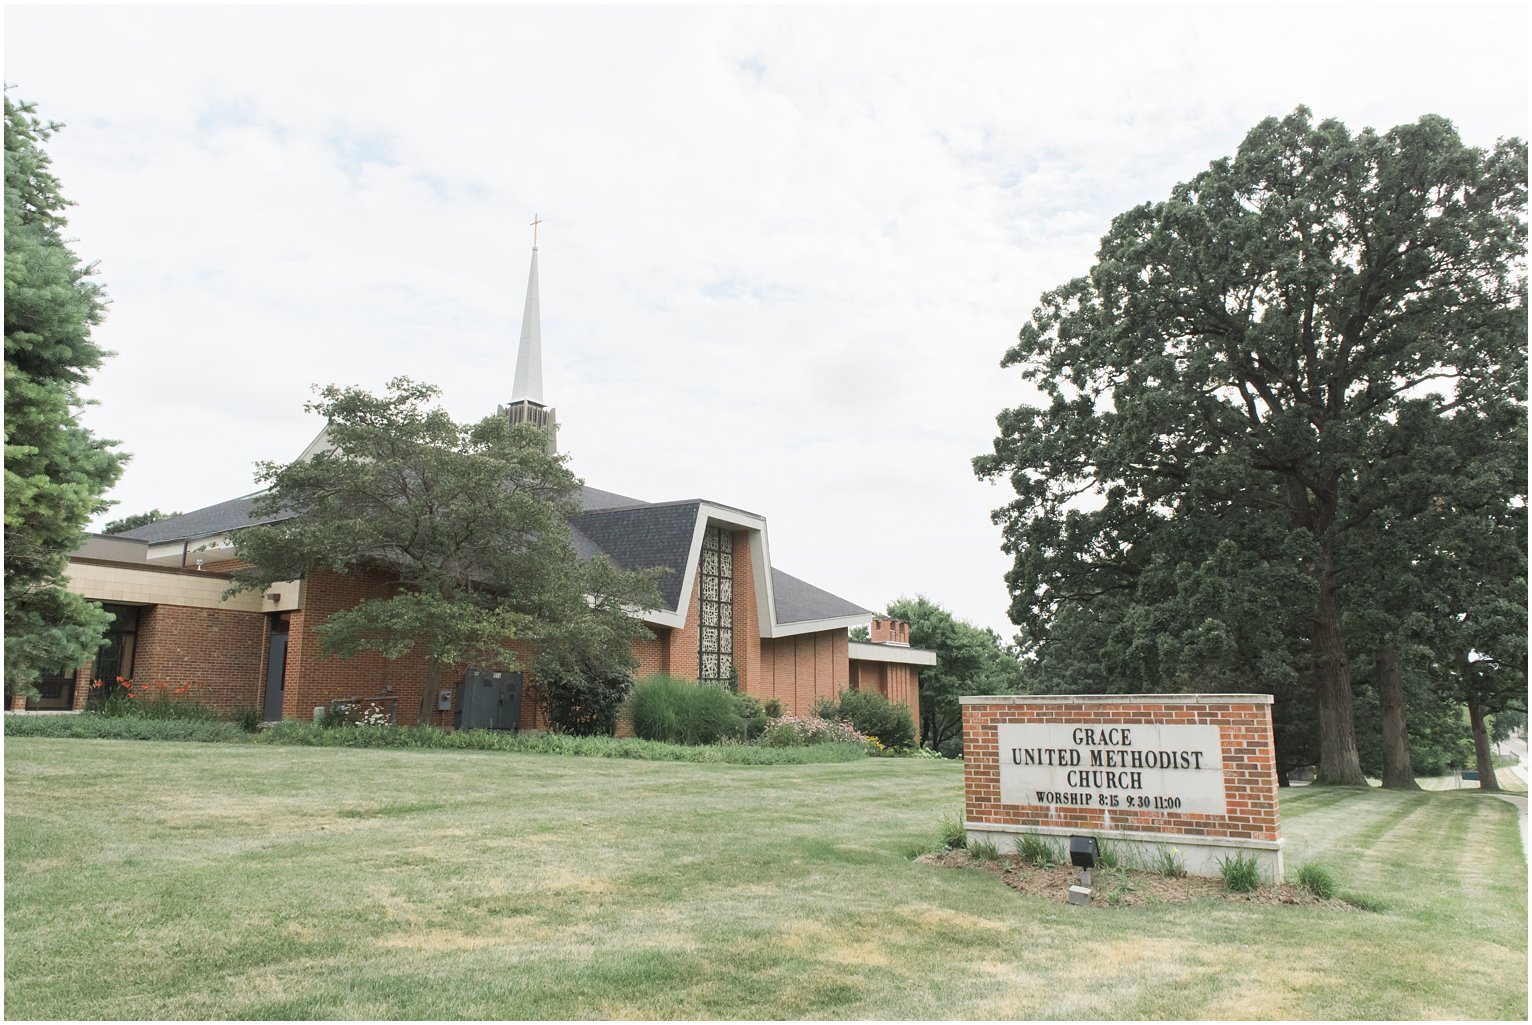 Grace United Methodist Church